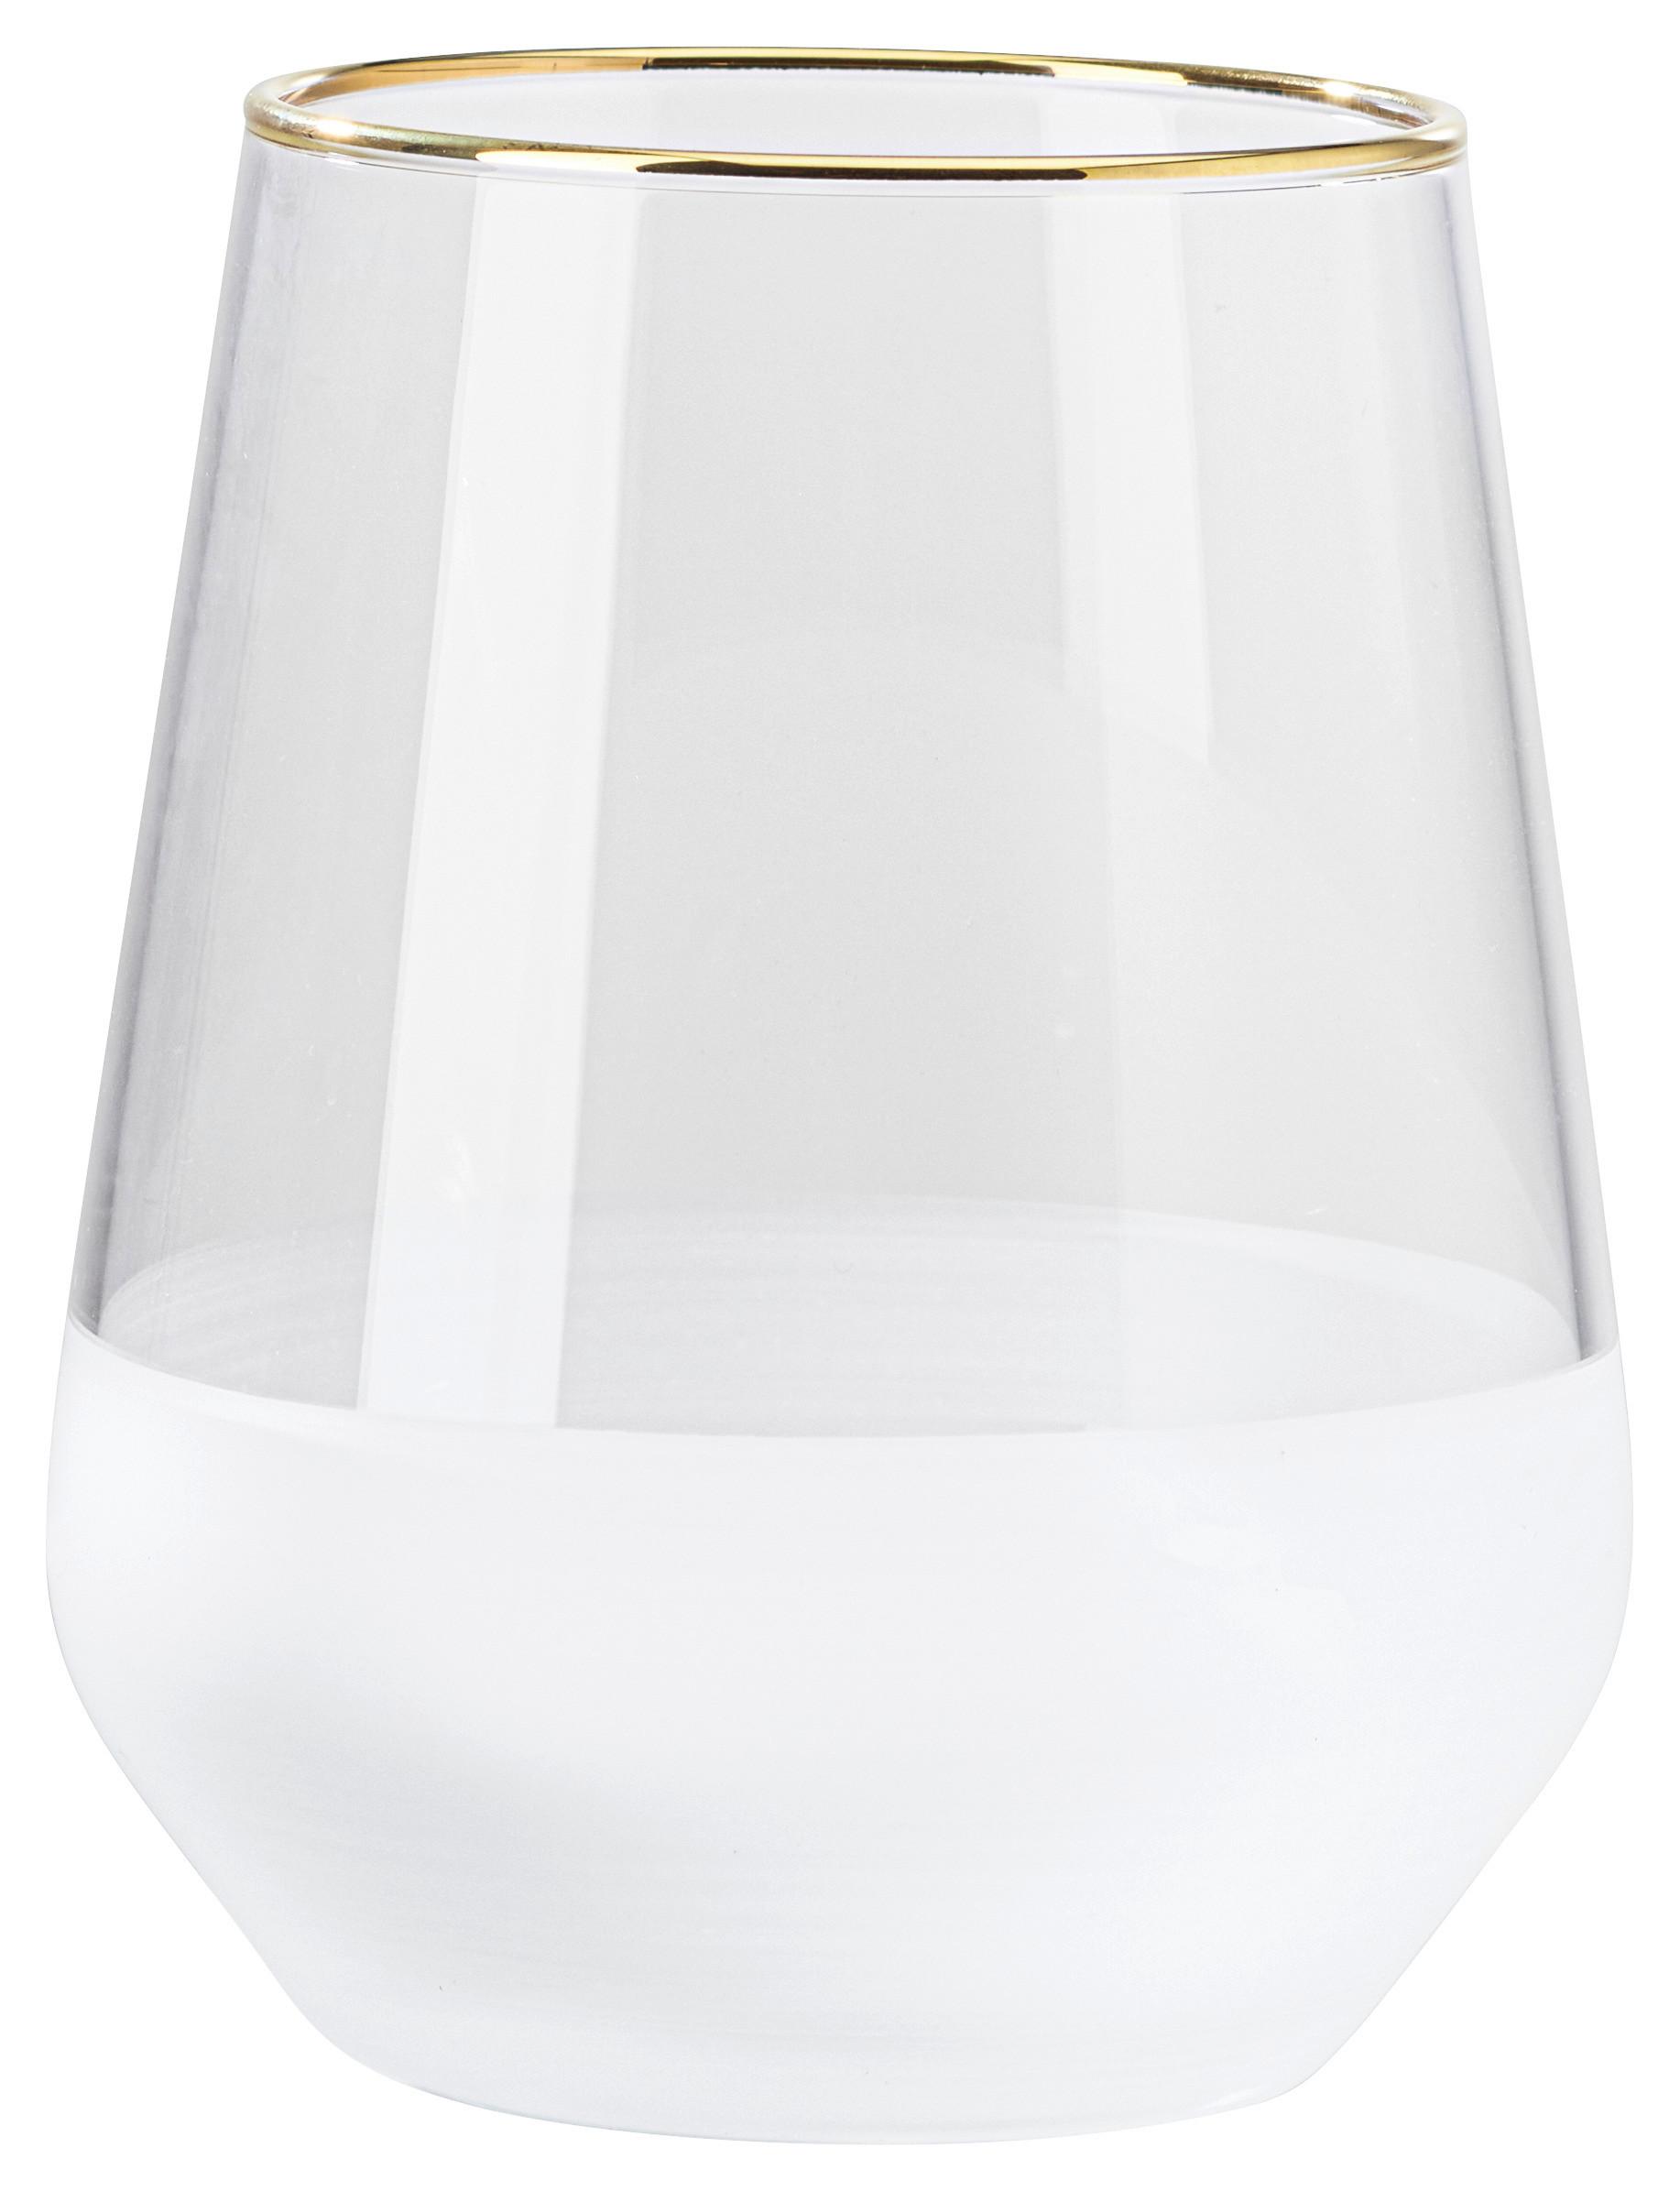 Pahar de băut Goldline - alb, Modern, sticlă (6,8/11cm) - Premium Living